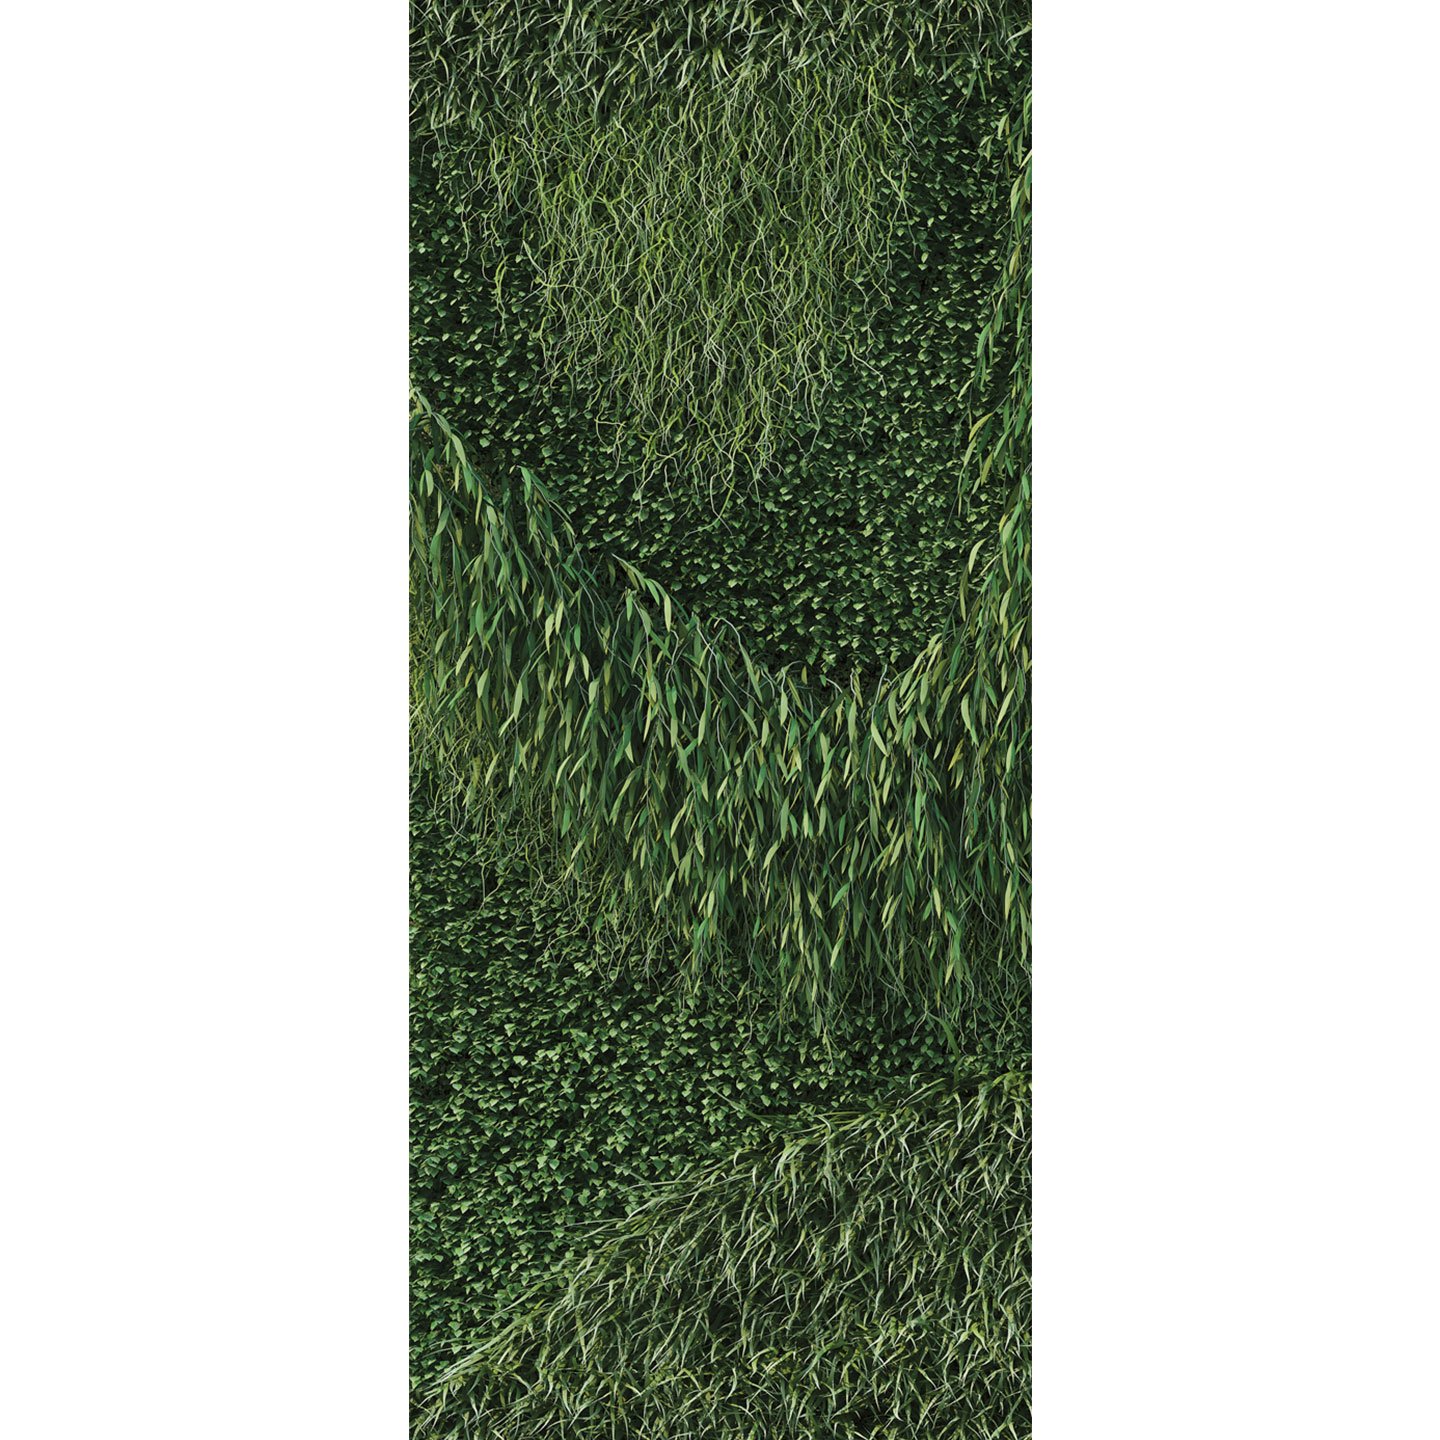 Haworth Buzziskin accessories wallpaper with green plant design